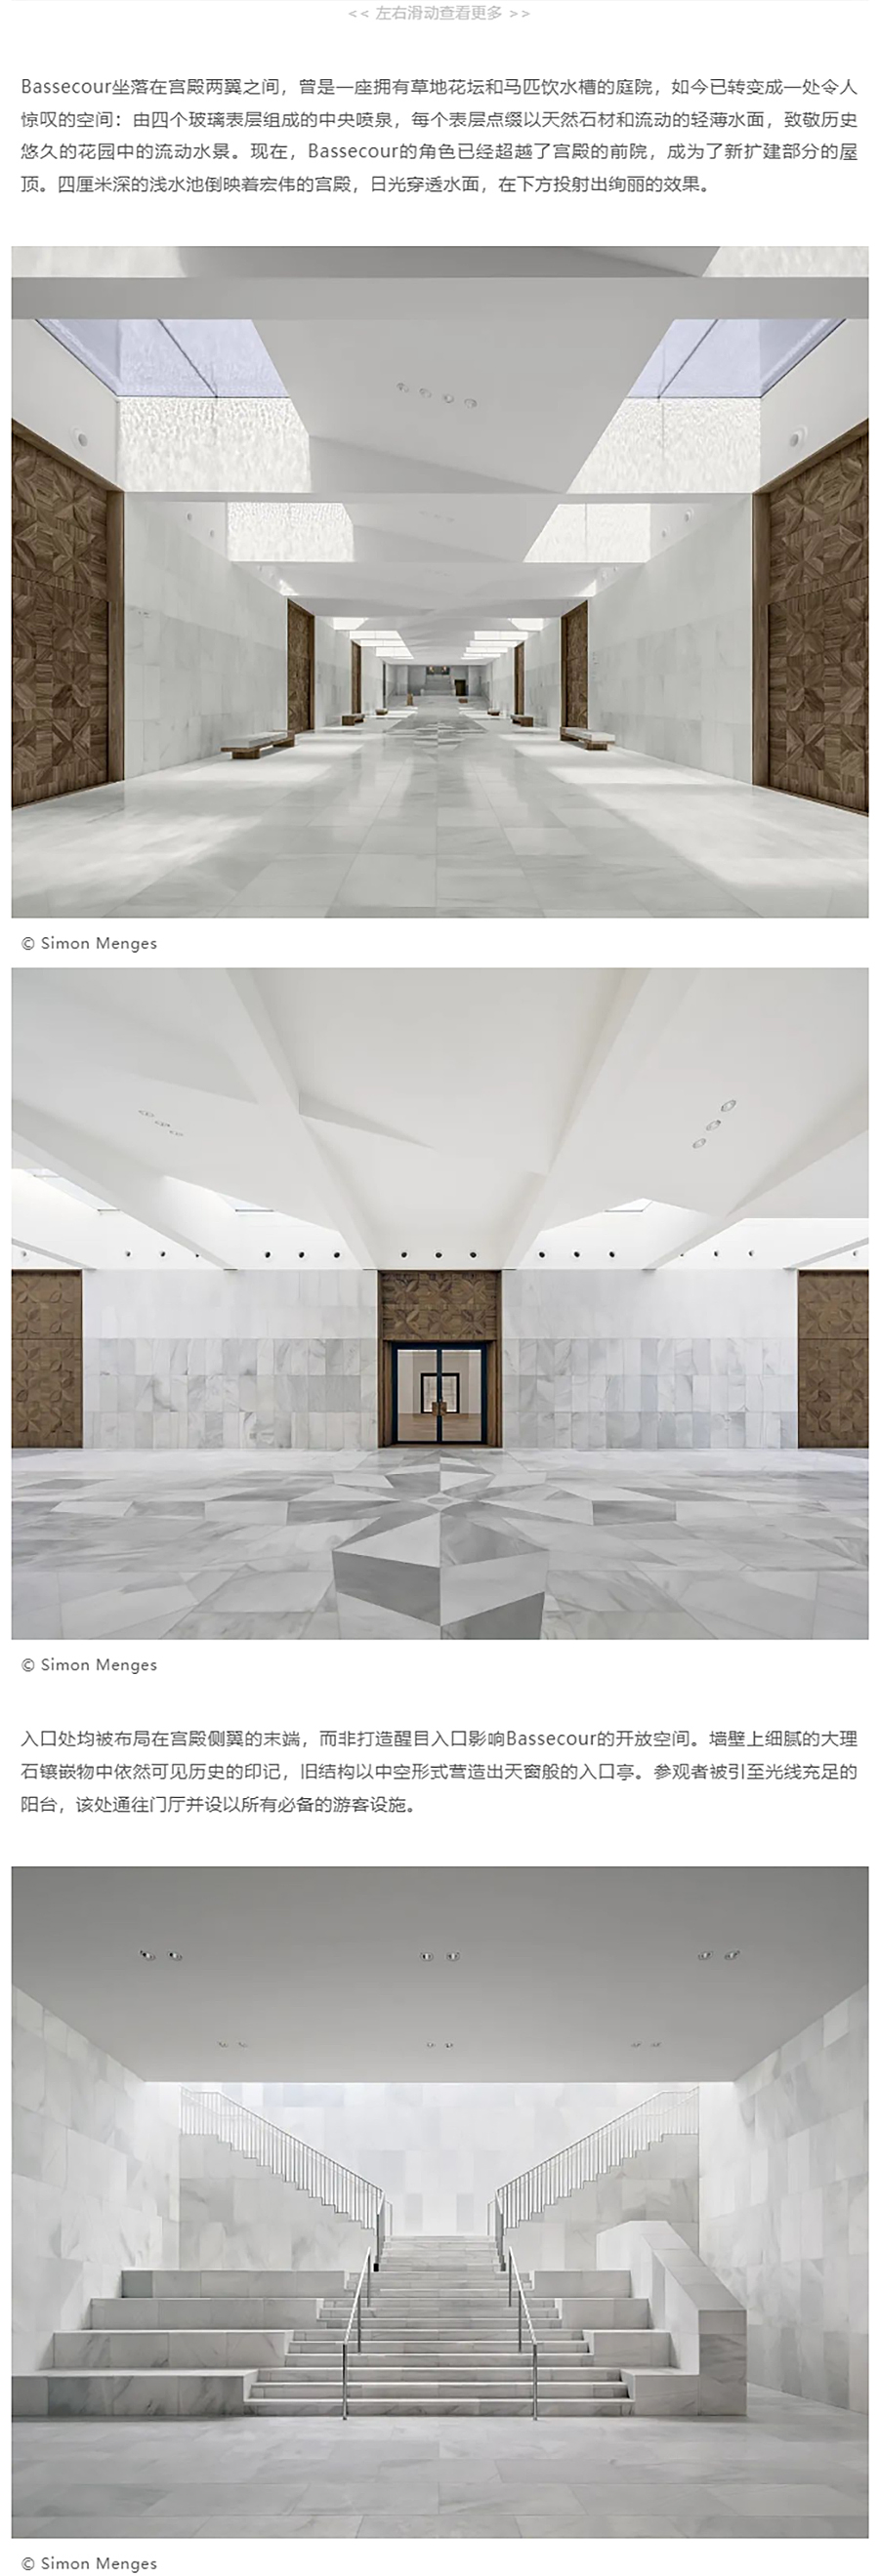 Renewal-Zone：在荷兰，如何修复扩建一座巴洛克皇宫博物馆_0003_图层-4 拷贝.jpg